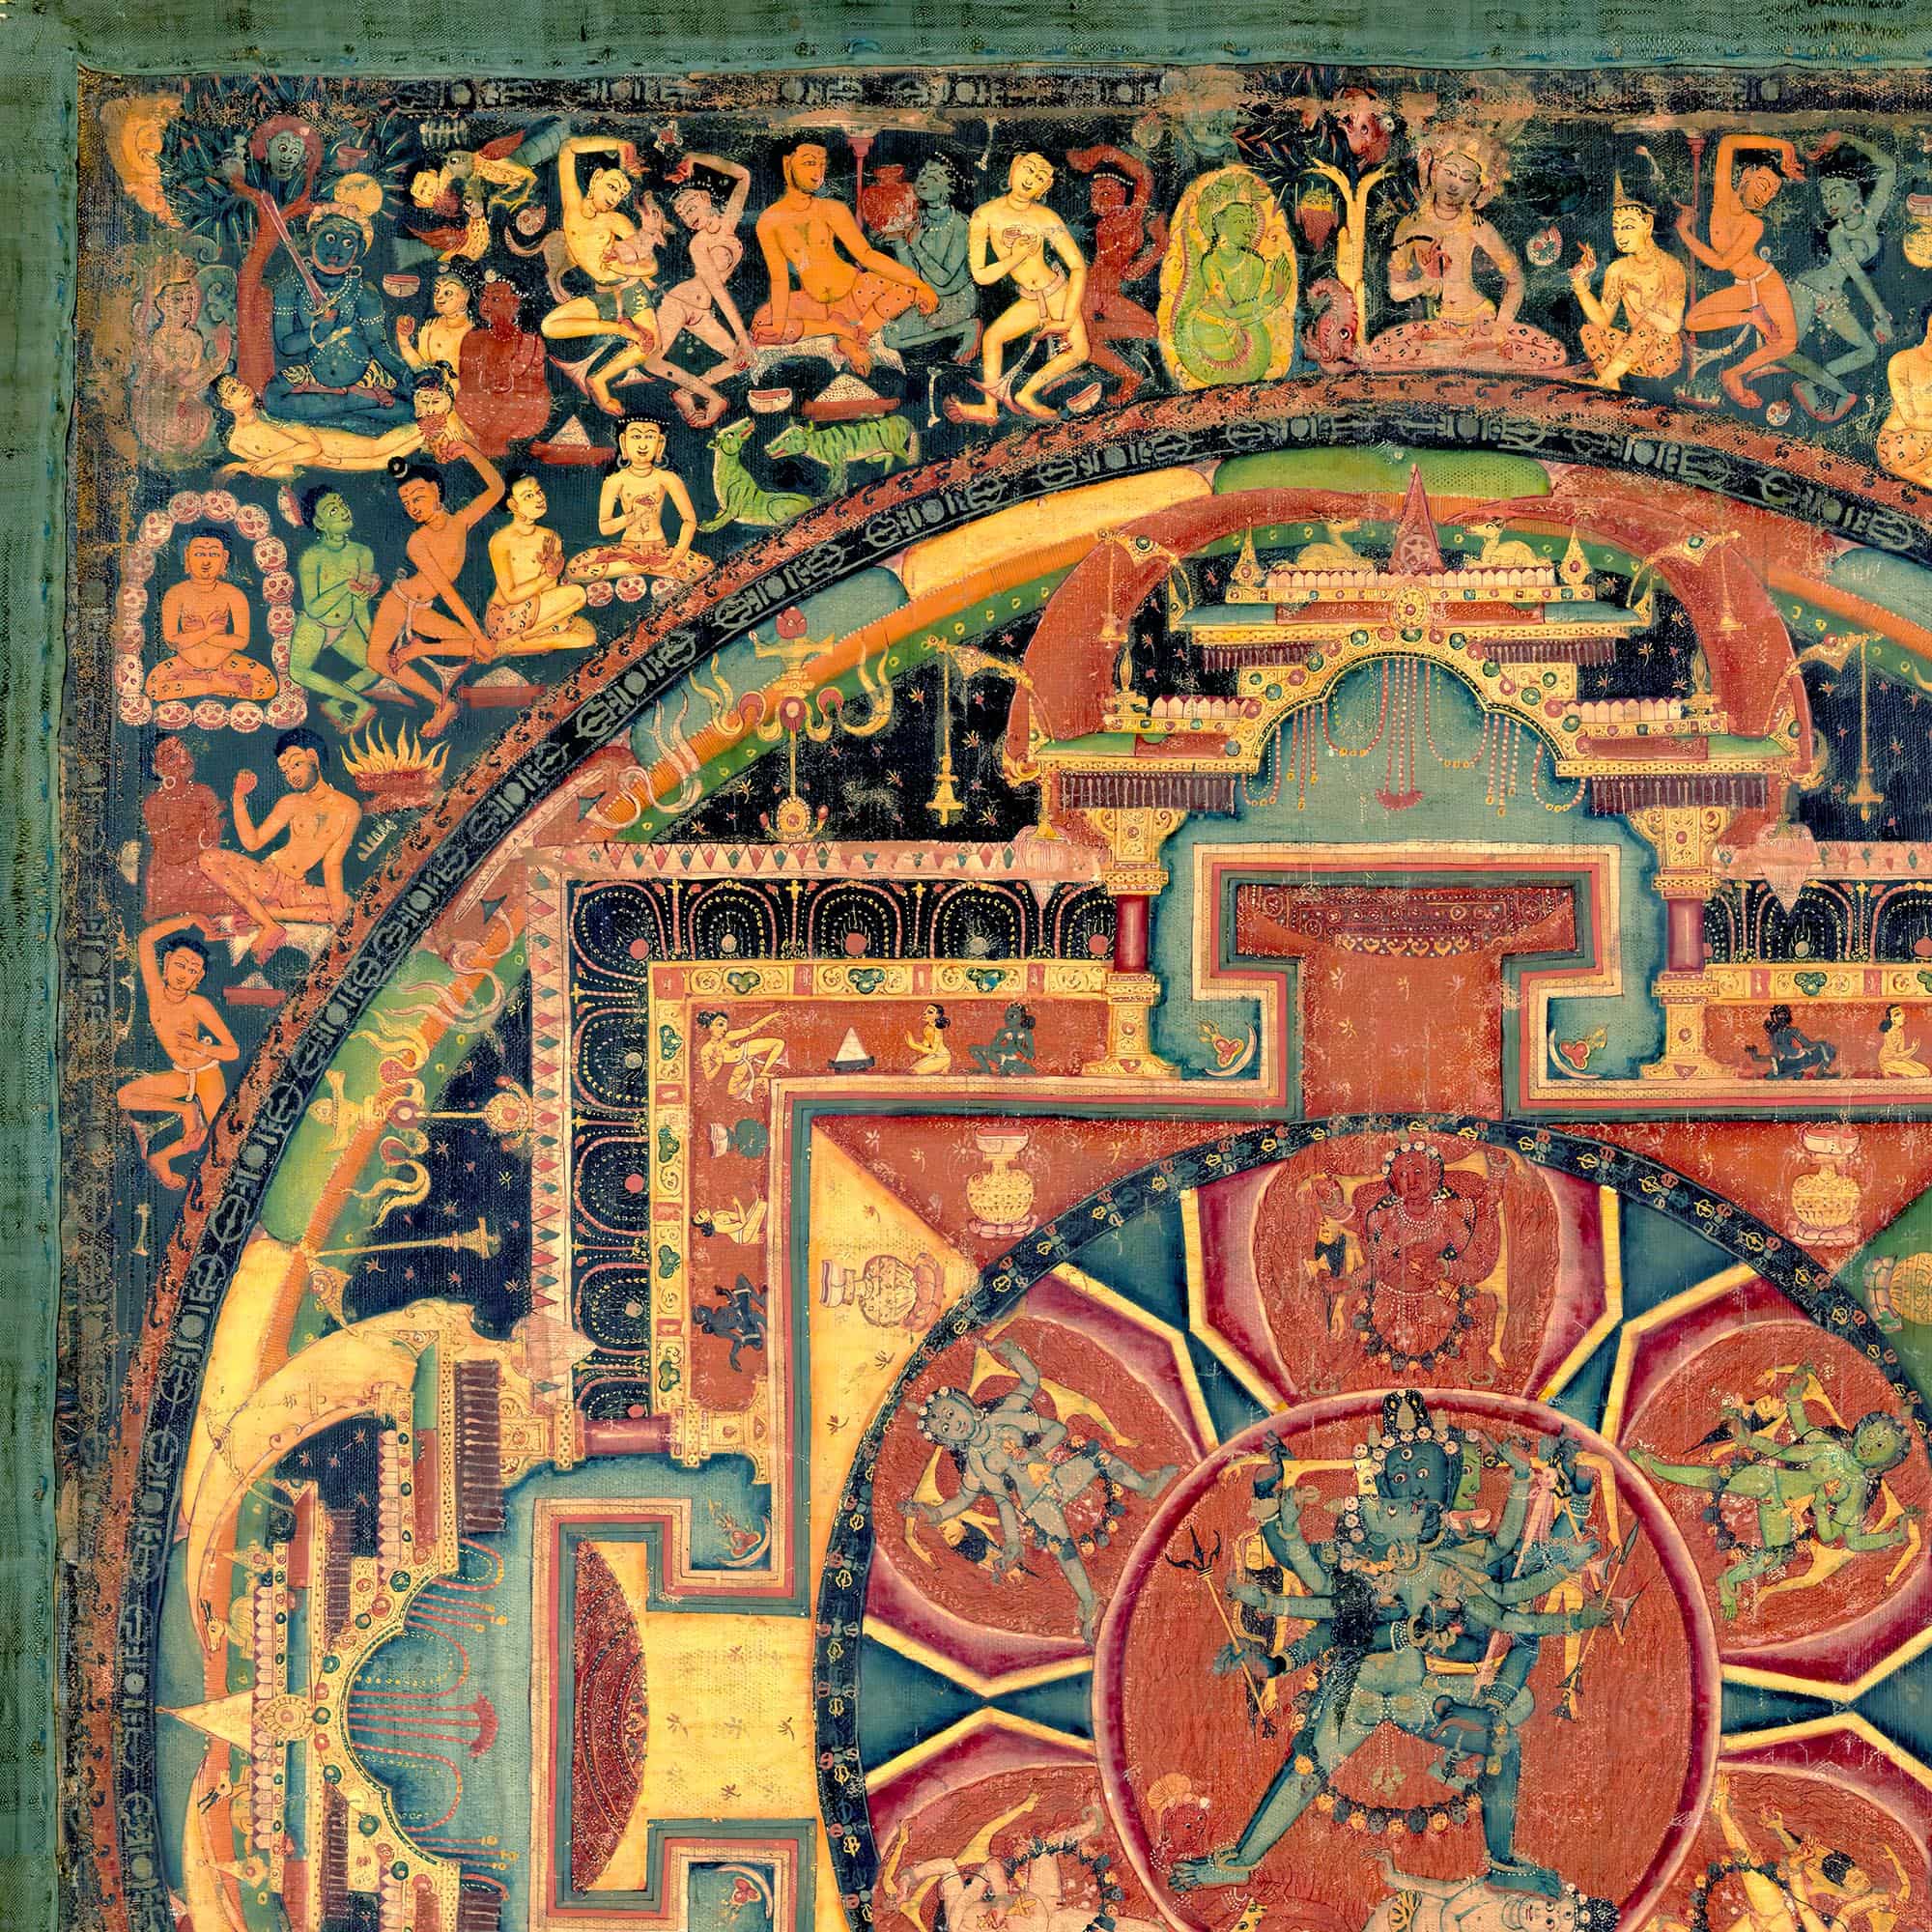 Chakrasamvara Mandala, Wheel of Perfect Bliss | Yoga Tantra Tibetan Vajrayana Buddhism Fine Art Print w Wood Hanger - Sacred Surreal